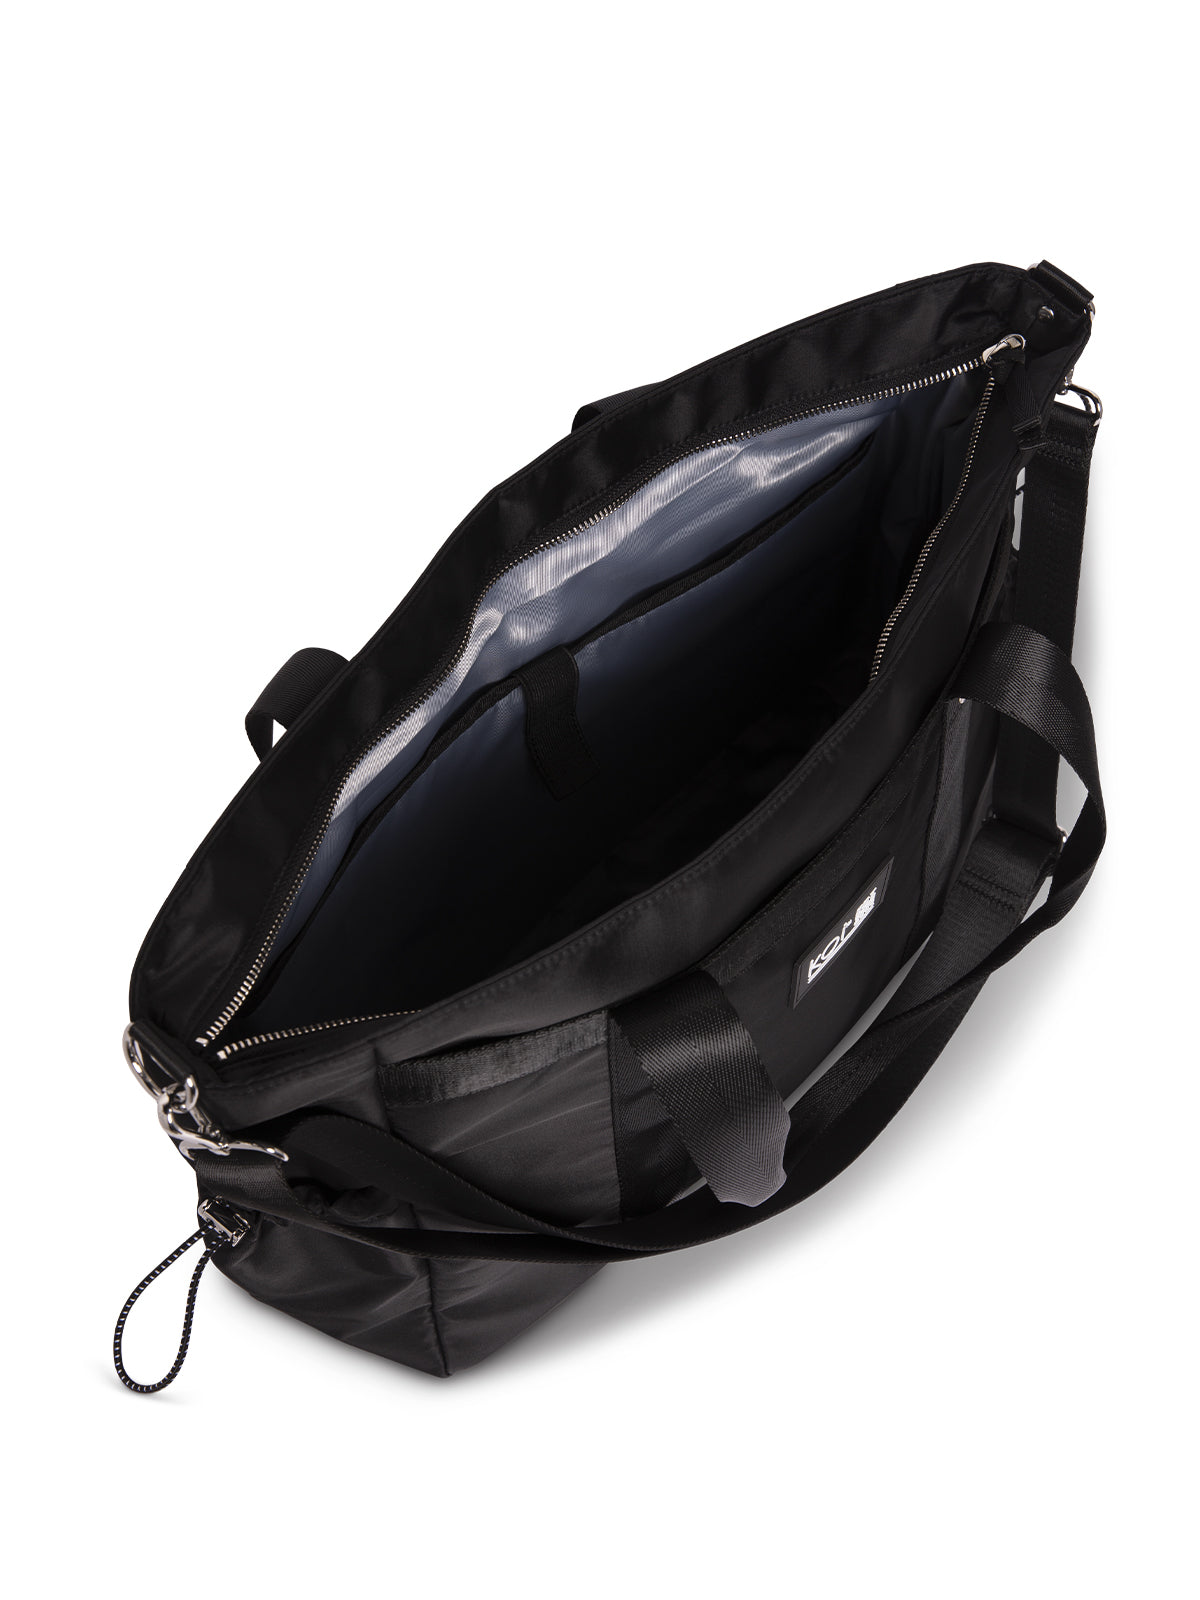 Tote Bag - A168 - Black